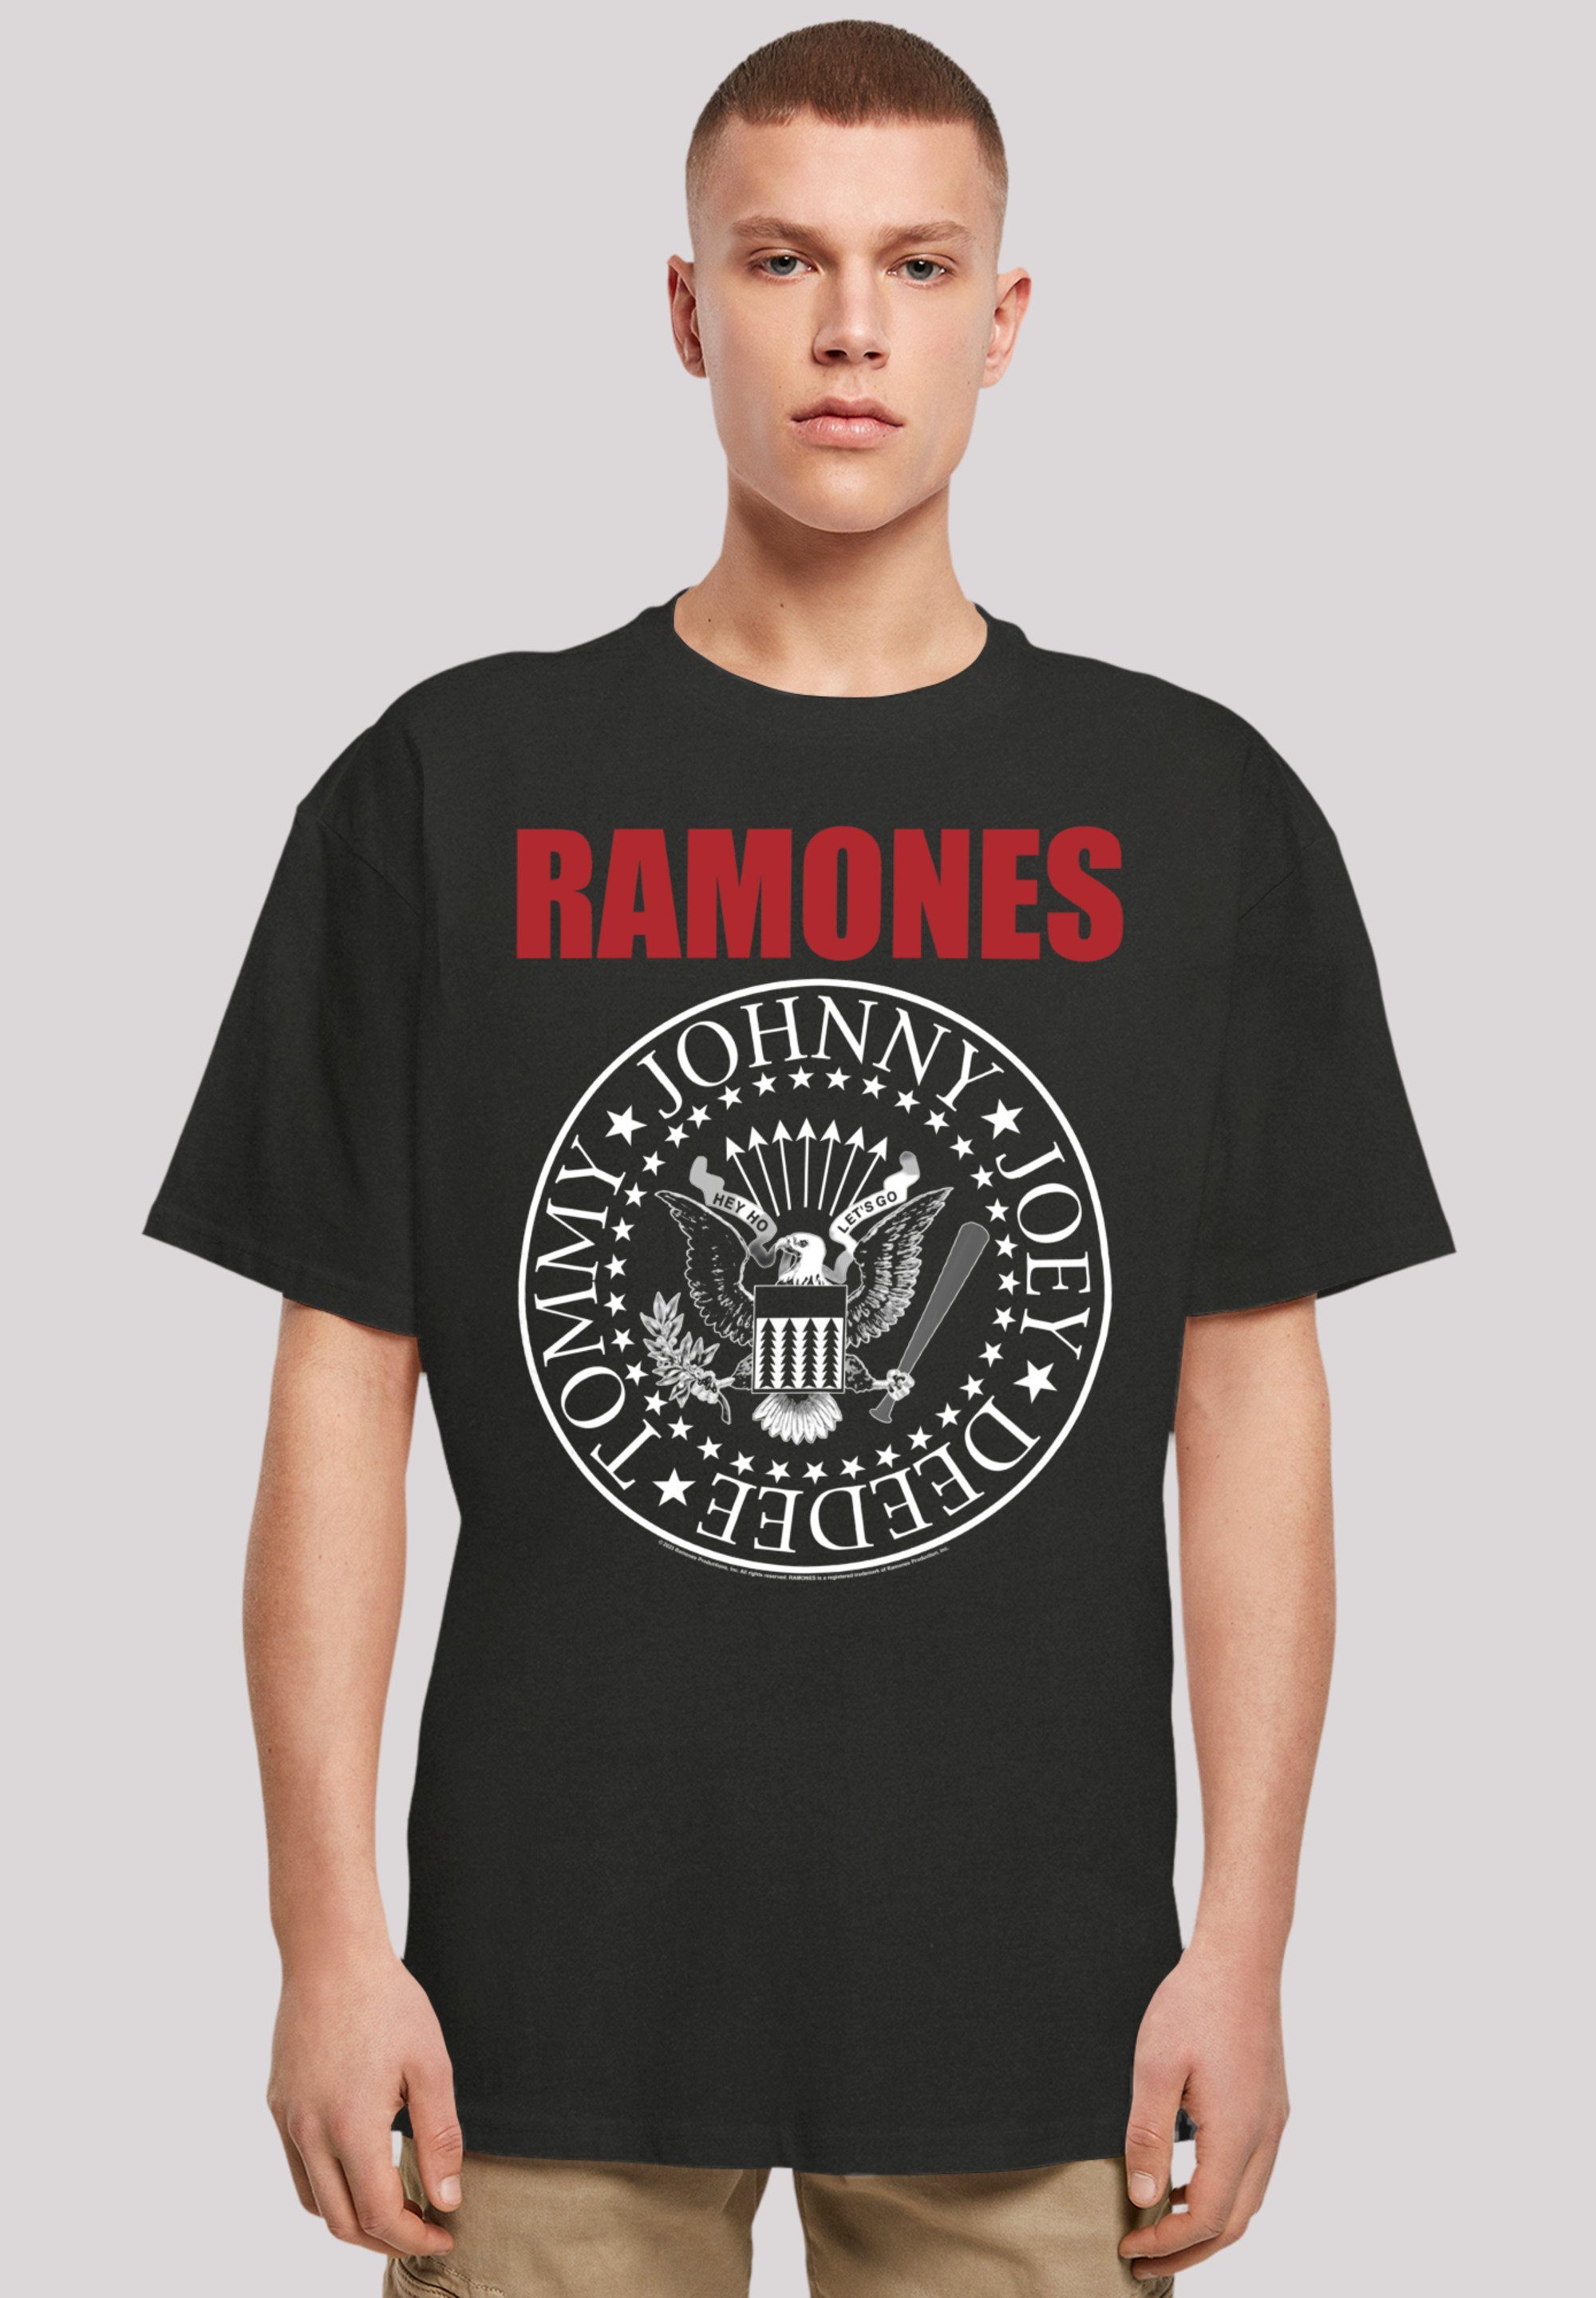 Seal T-Shirt Qualität, F4NT4STIC Rock-Musik schwarz Ramones Premium Band Band, Musik Red Rock Text